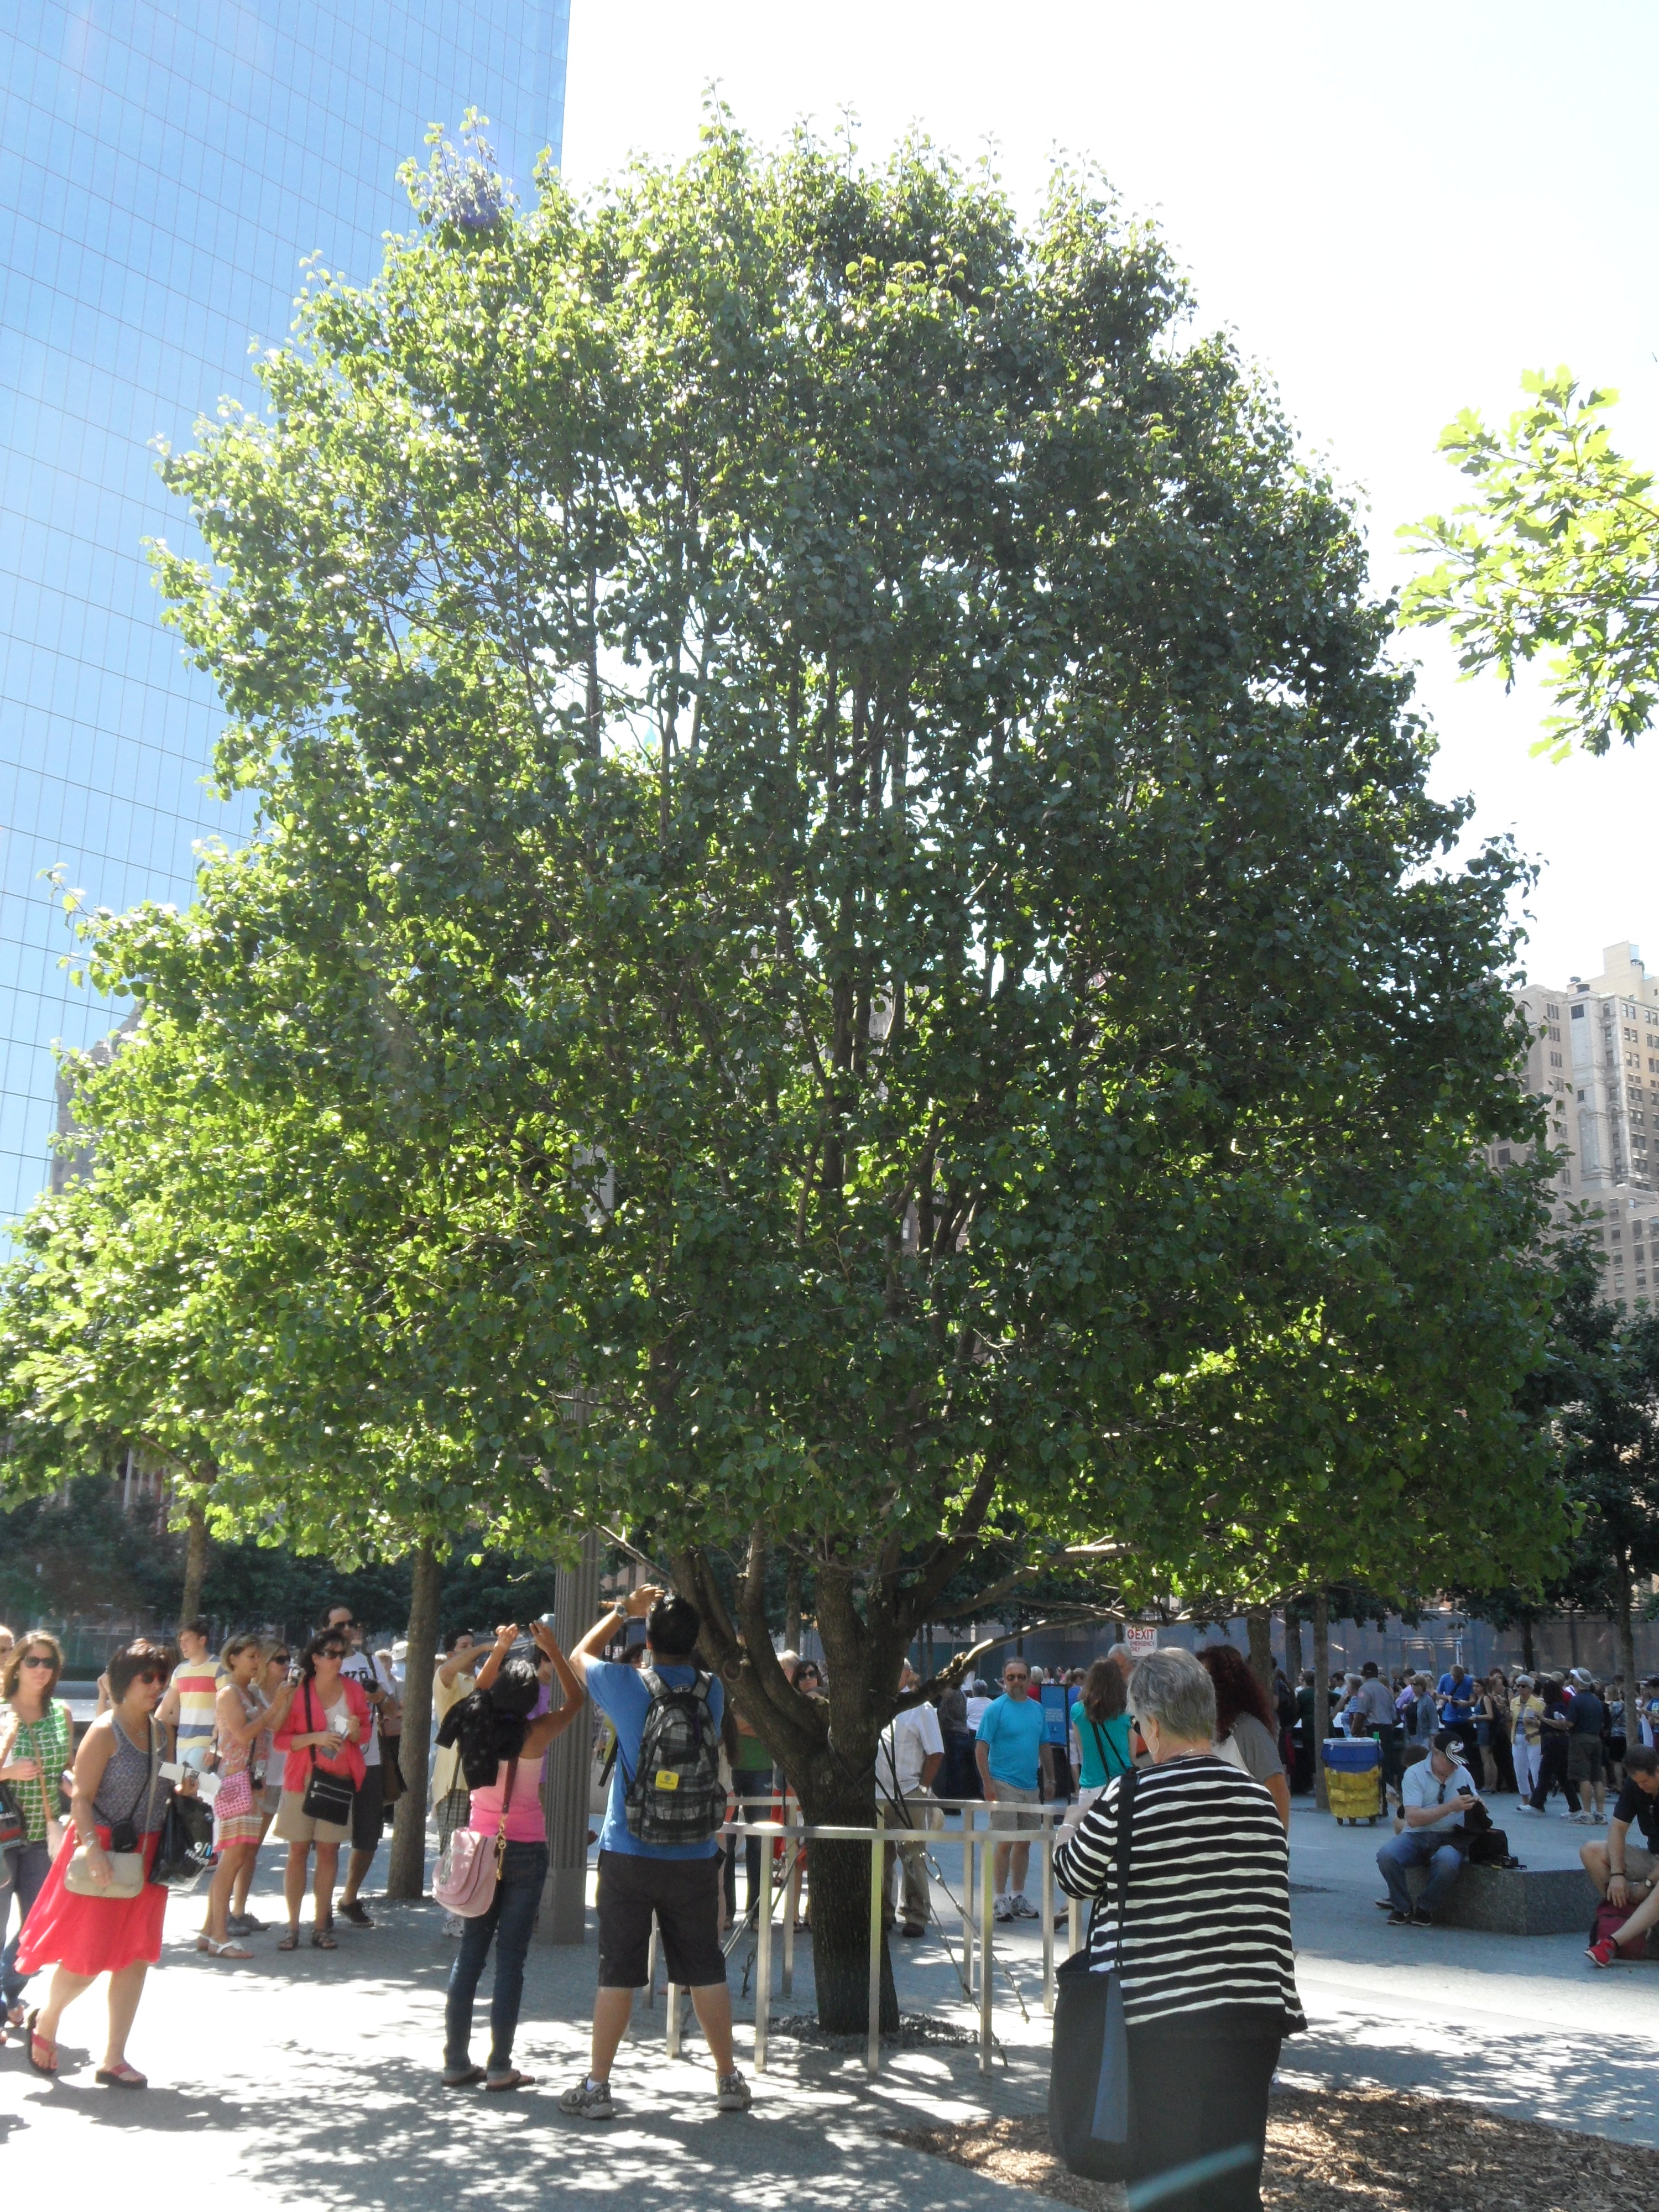 The 9/11 Survivor Tree